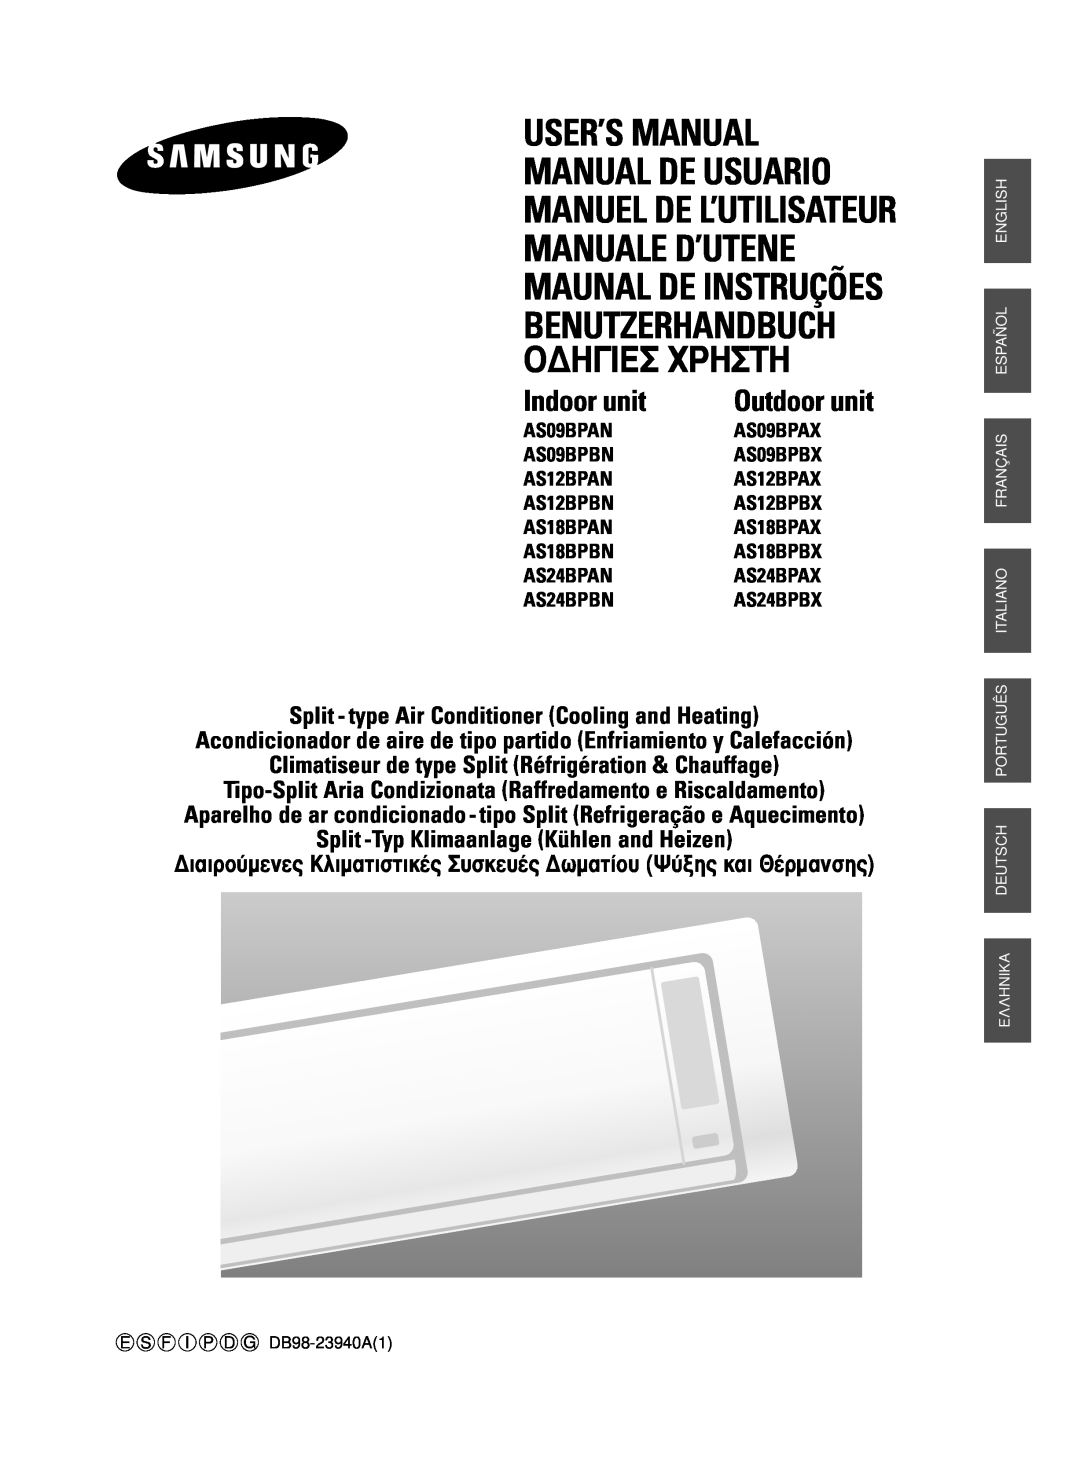 Samsung AS24BPAX, AS09BPAN, AS24BPAN, AS12BPAN manual Owner’S Instructions, Split-type Air Conditioner, Cooling and Heating 